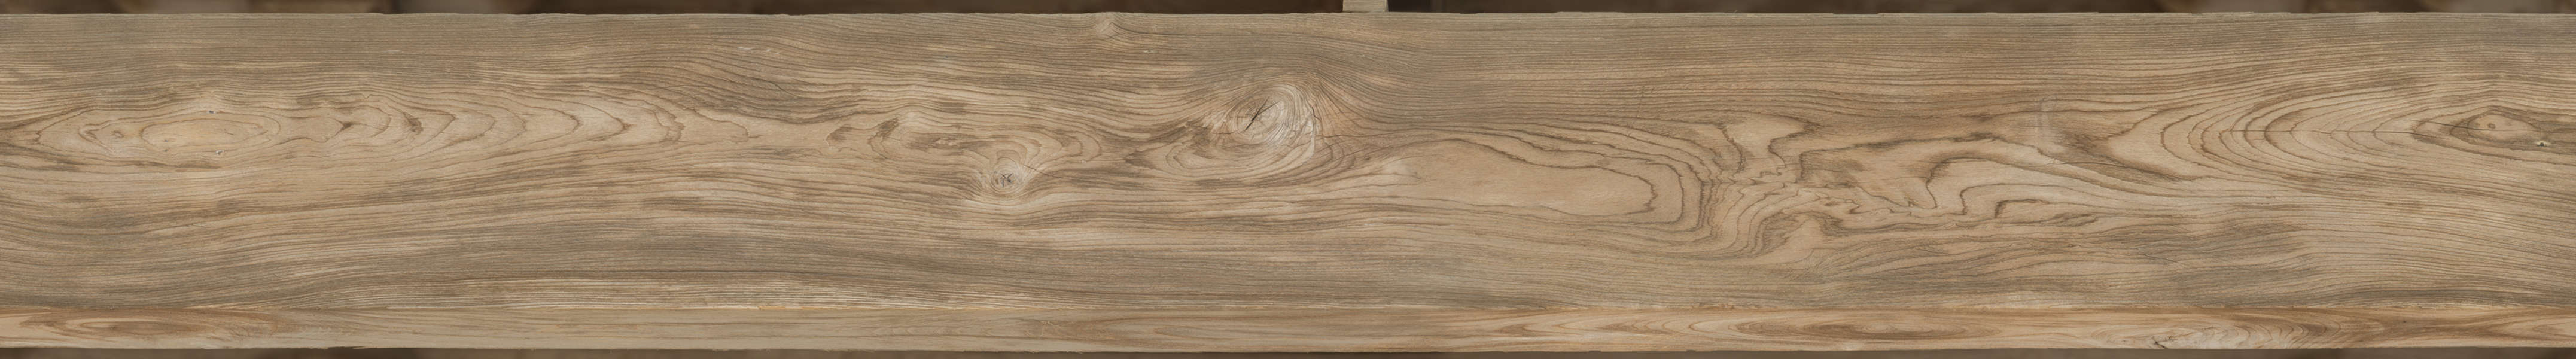 WoodFine0074 - Free Background Texture - wood grain beam bare shrine